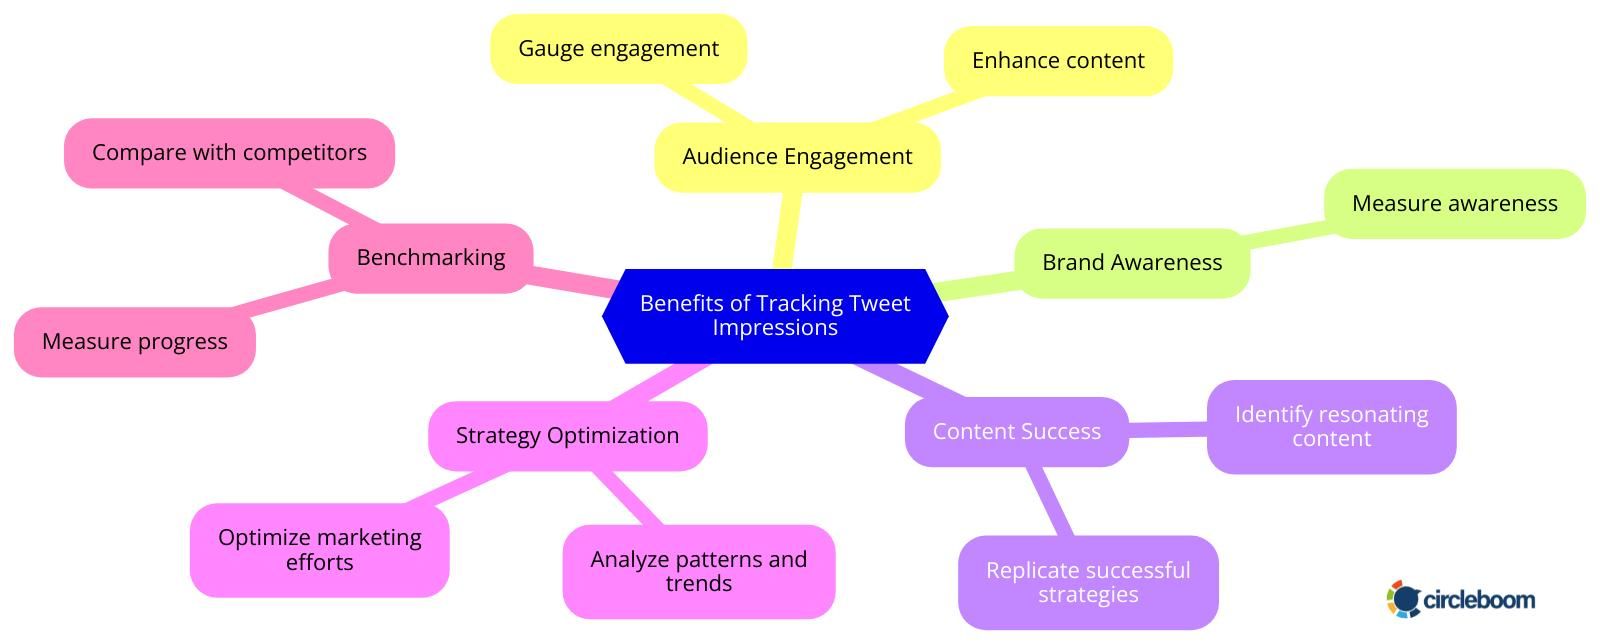 Benefits of tracking tweet impressions